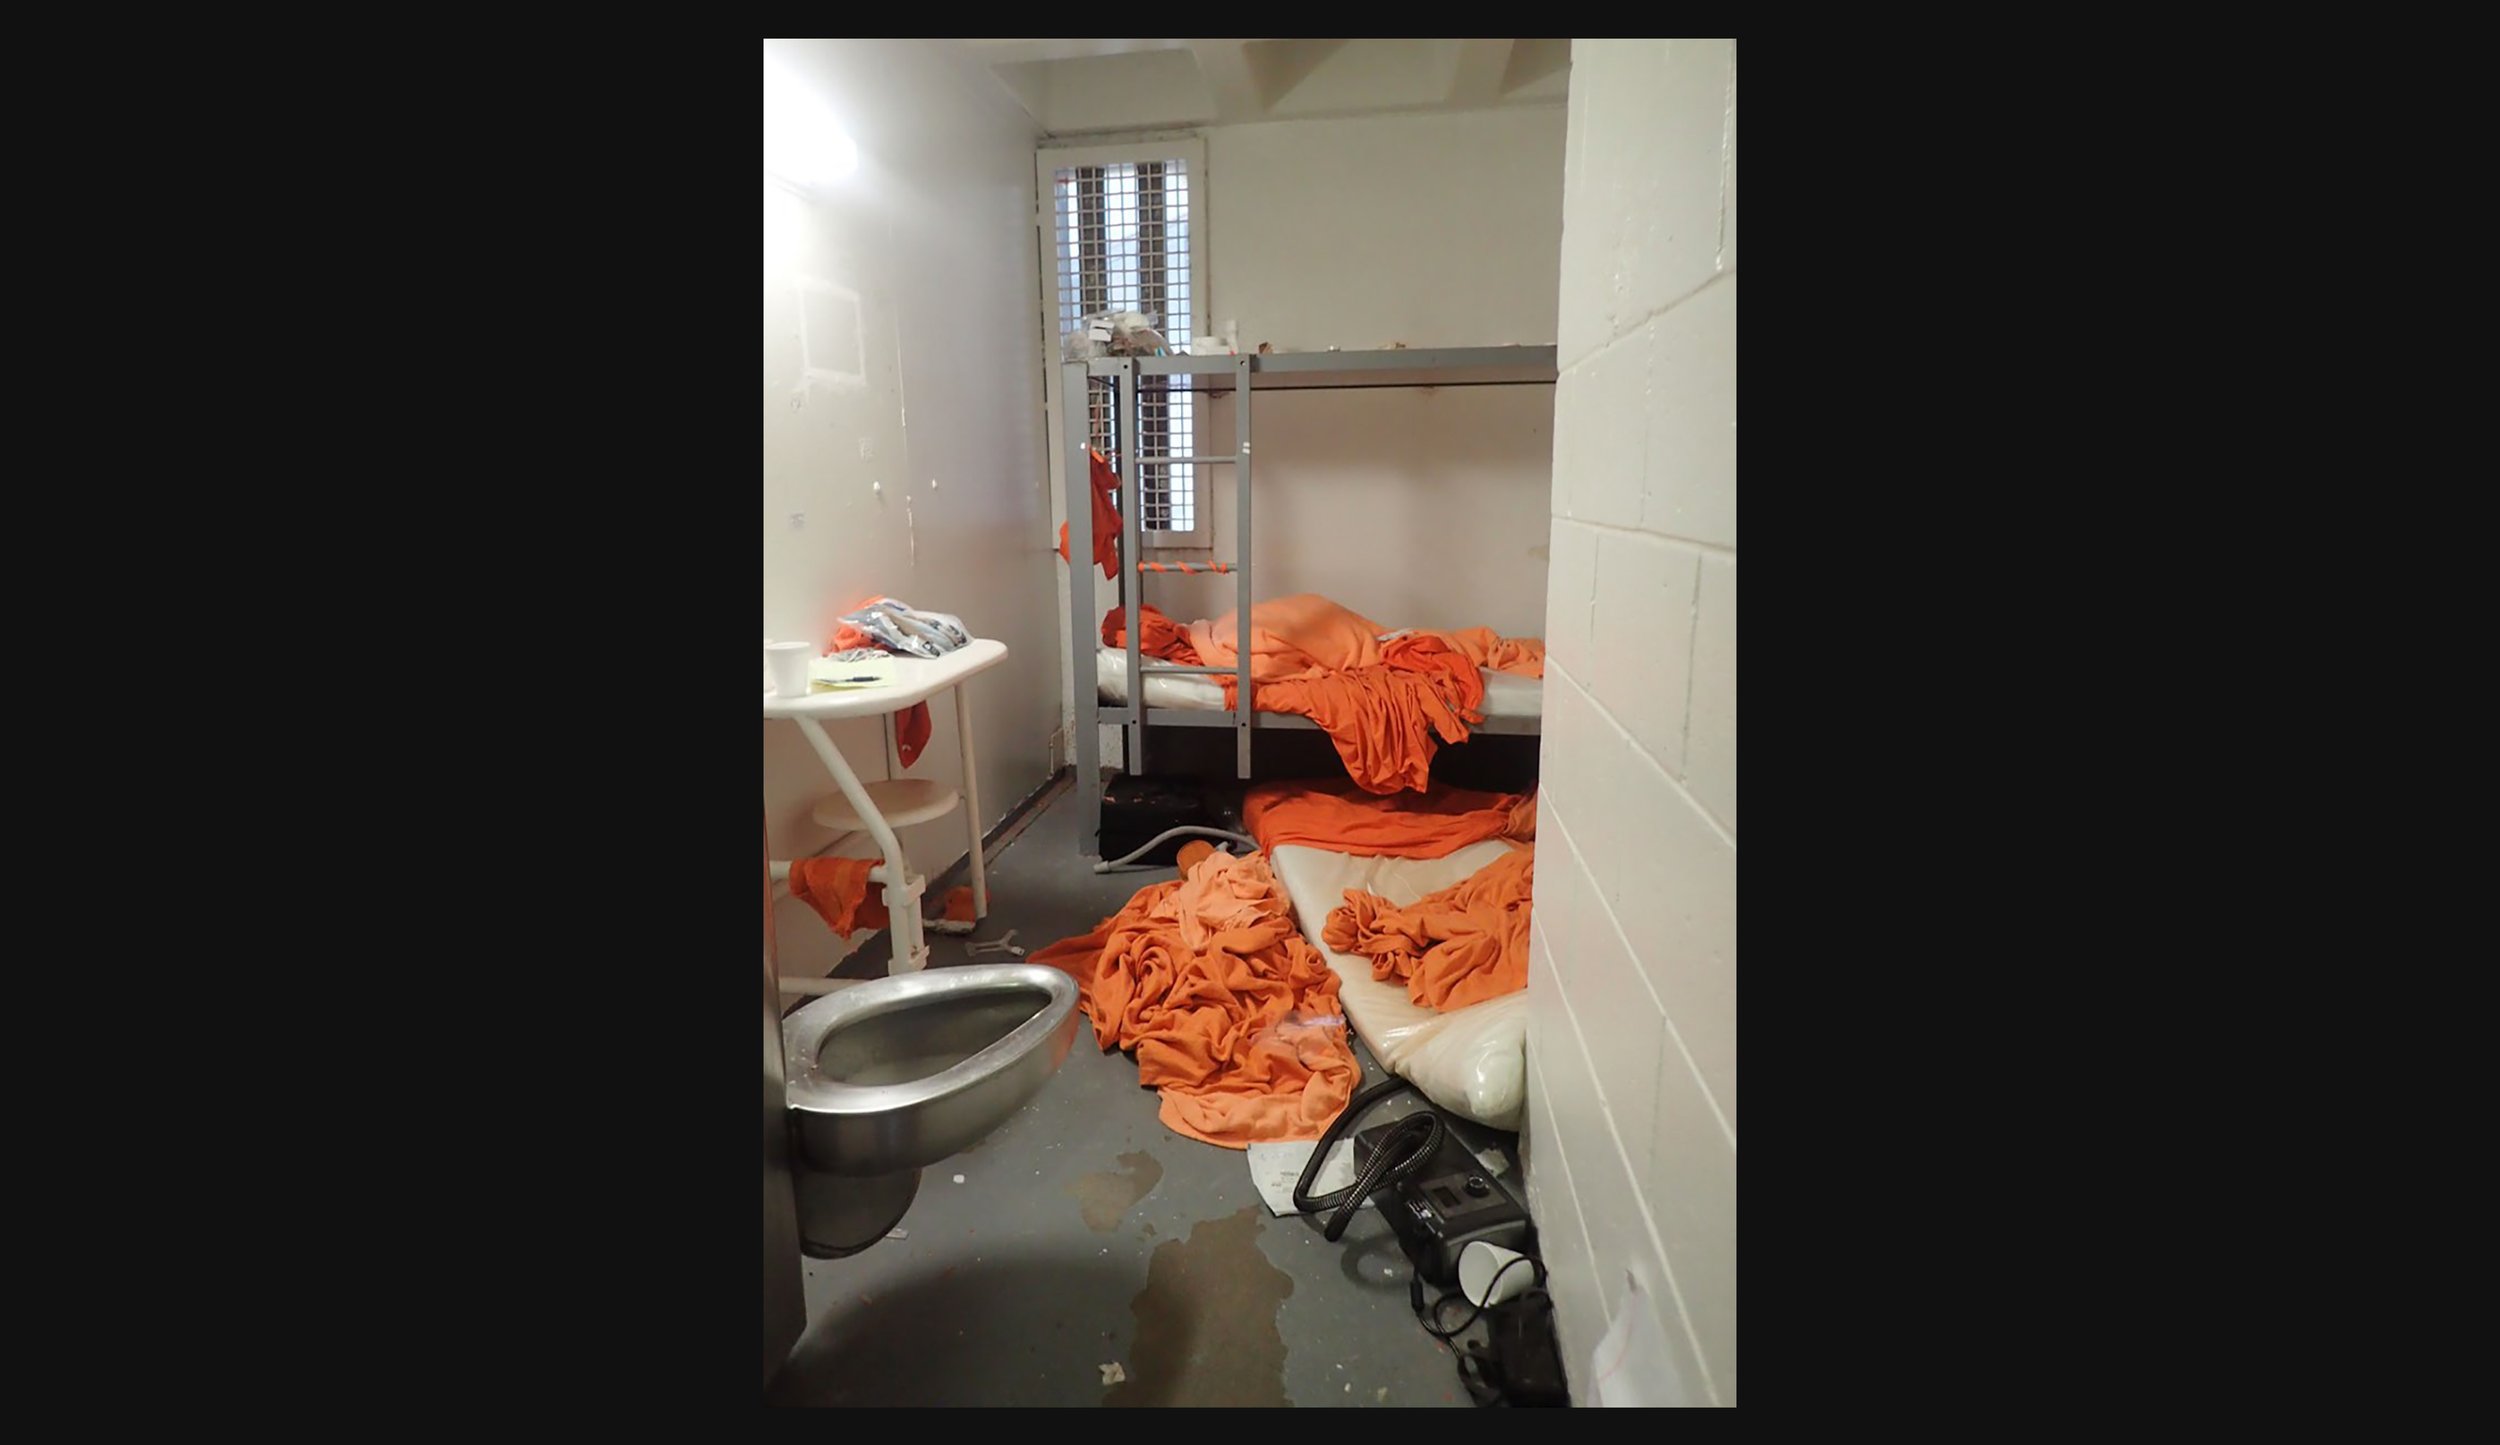  Jeffrey’s prison cell 